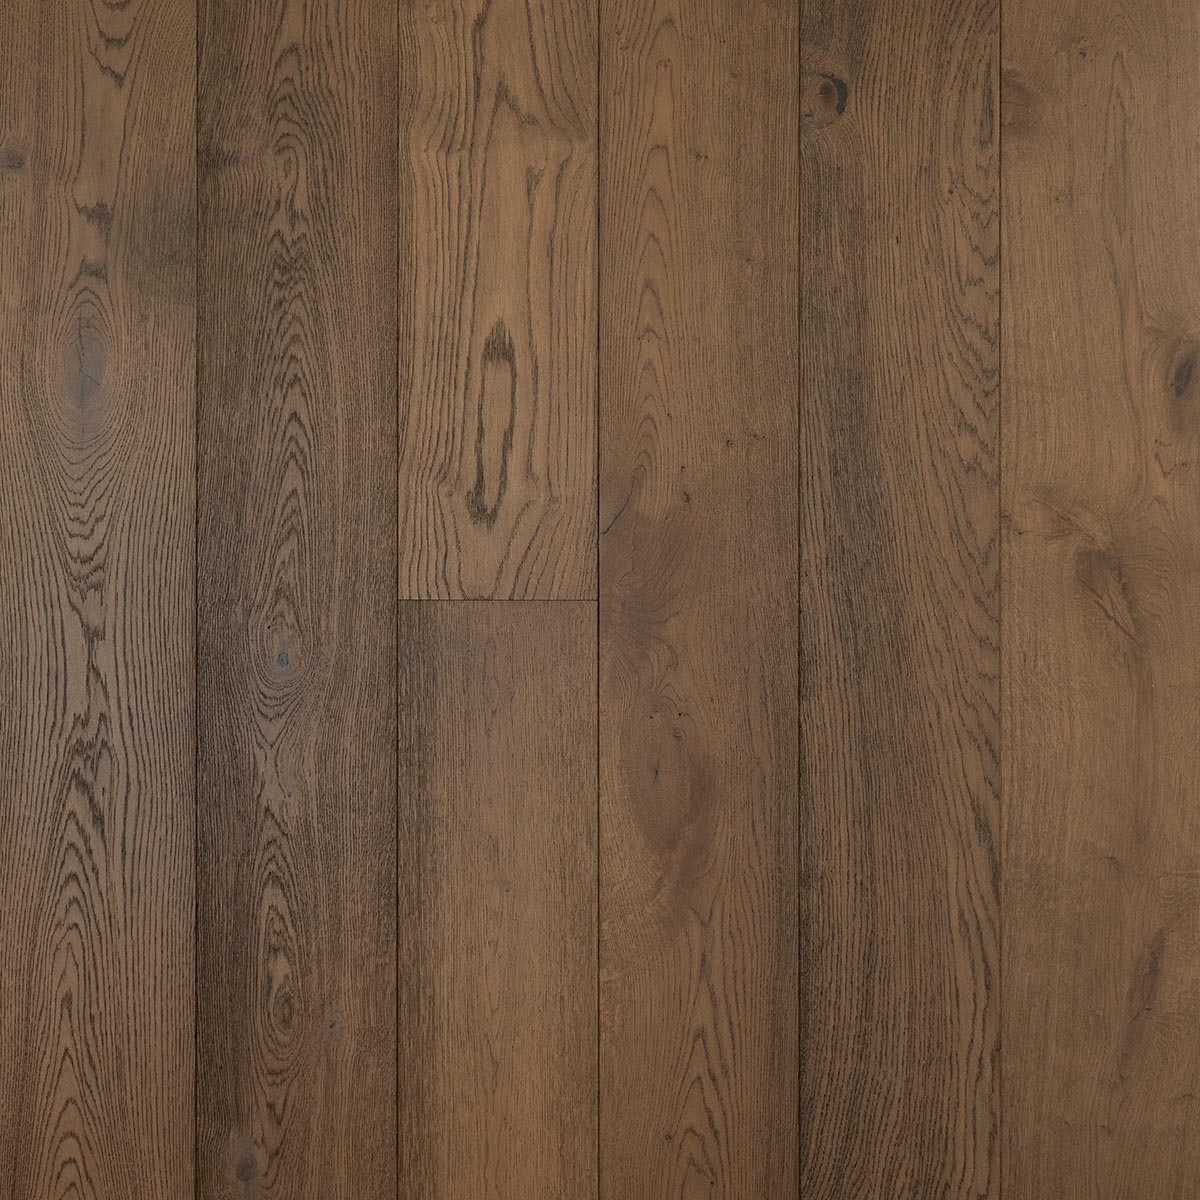 HG106 Brampton - Brushed & Oiled Rustic Oak Bevelled Wooden Floor